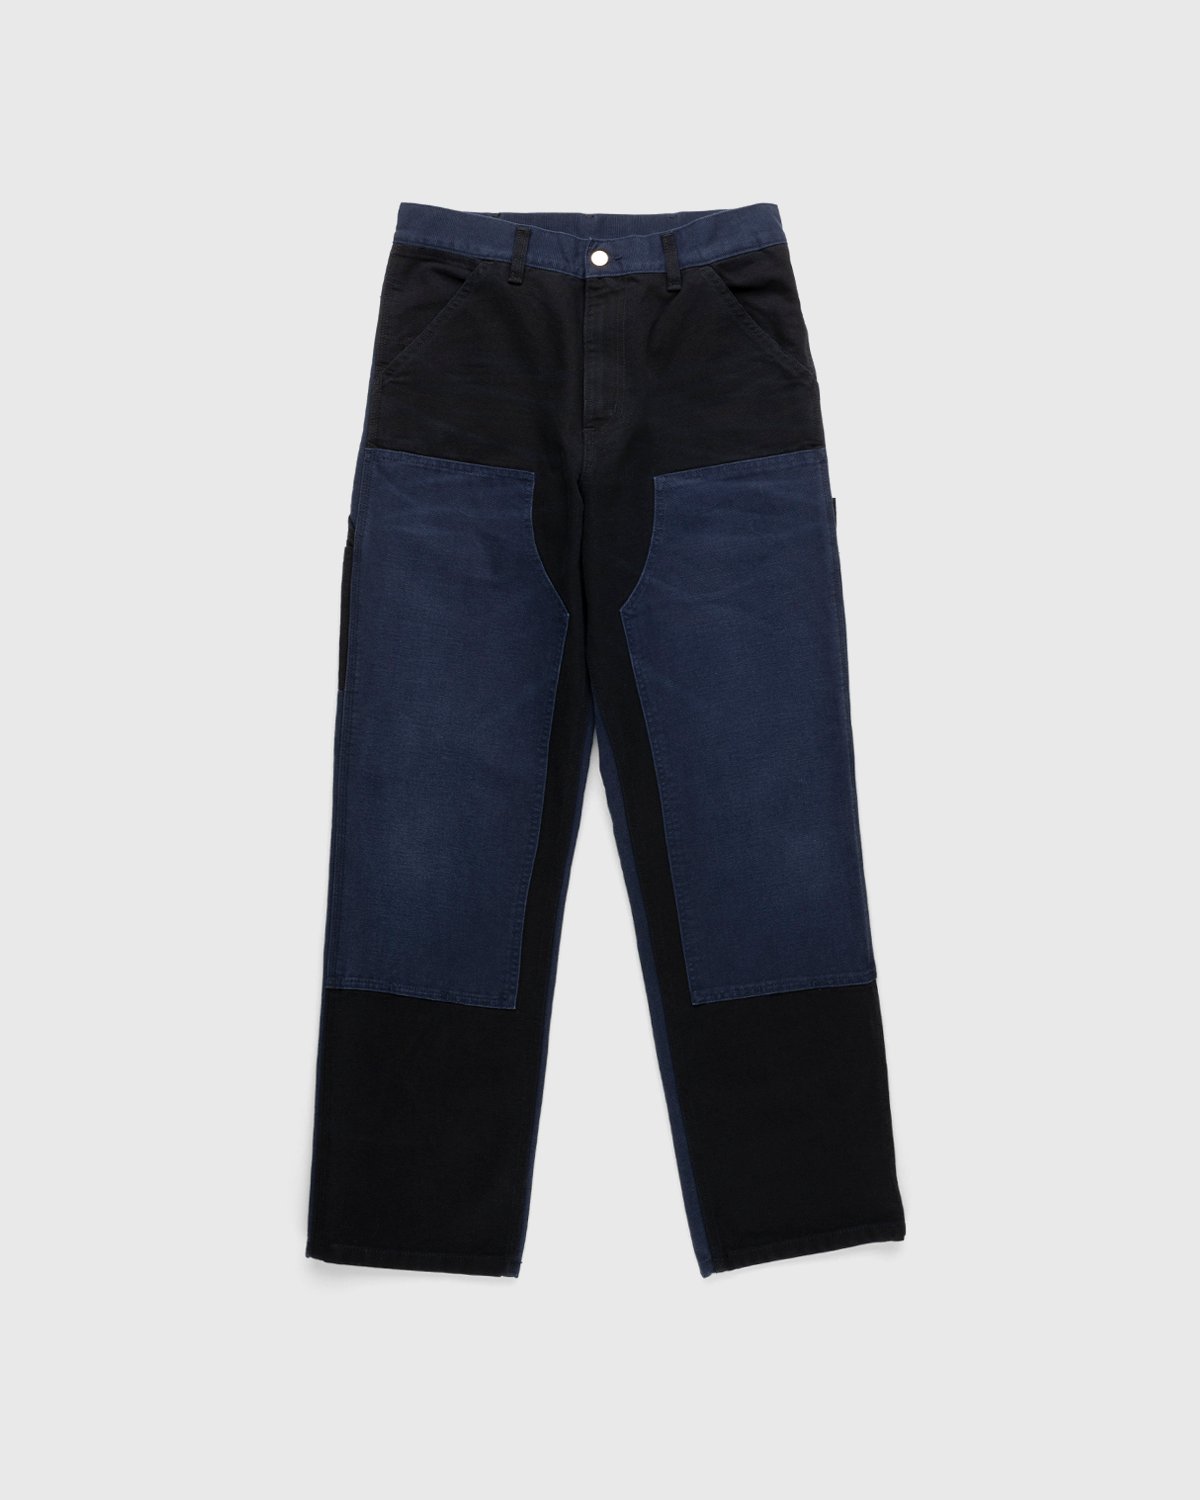 Carhartt WIP - Double Knee Pant Dark Navy - Clothing - Blue - Image 1